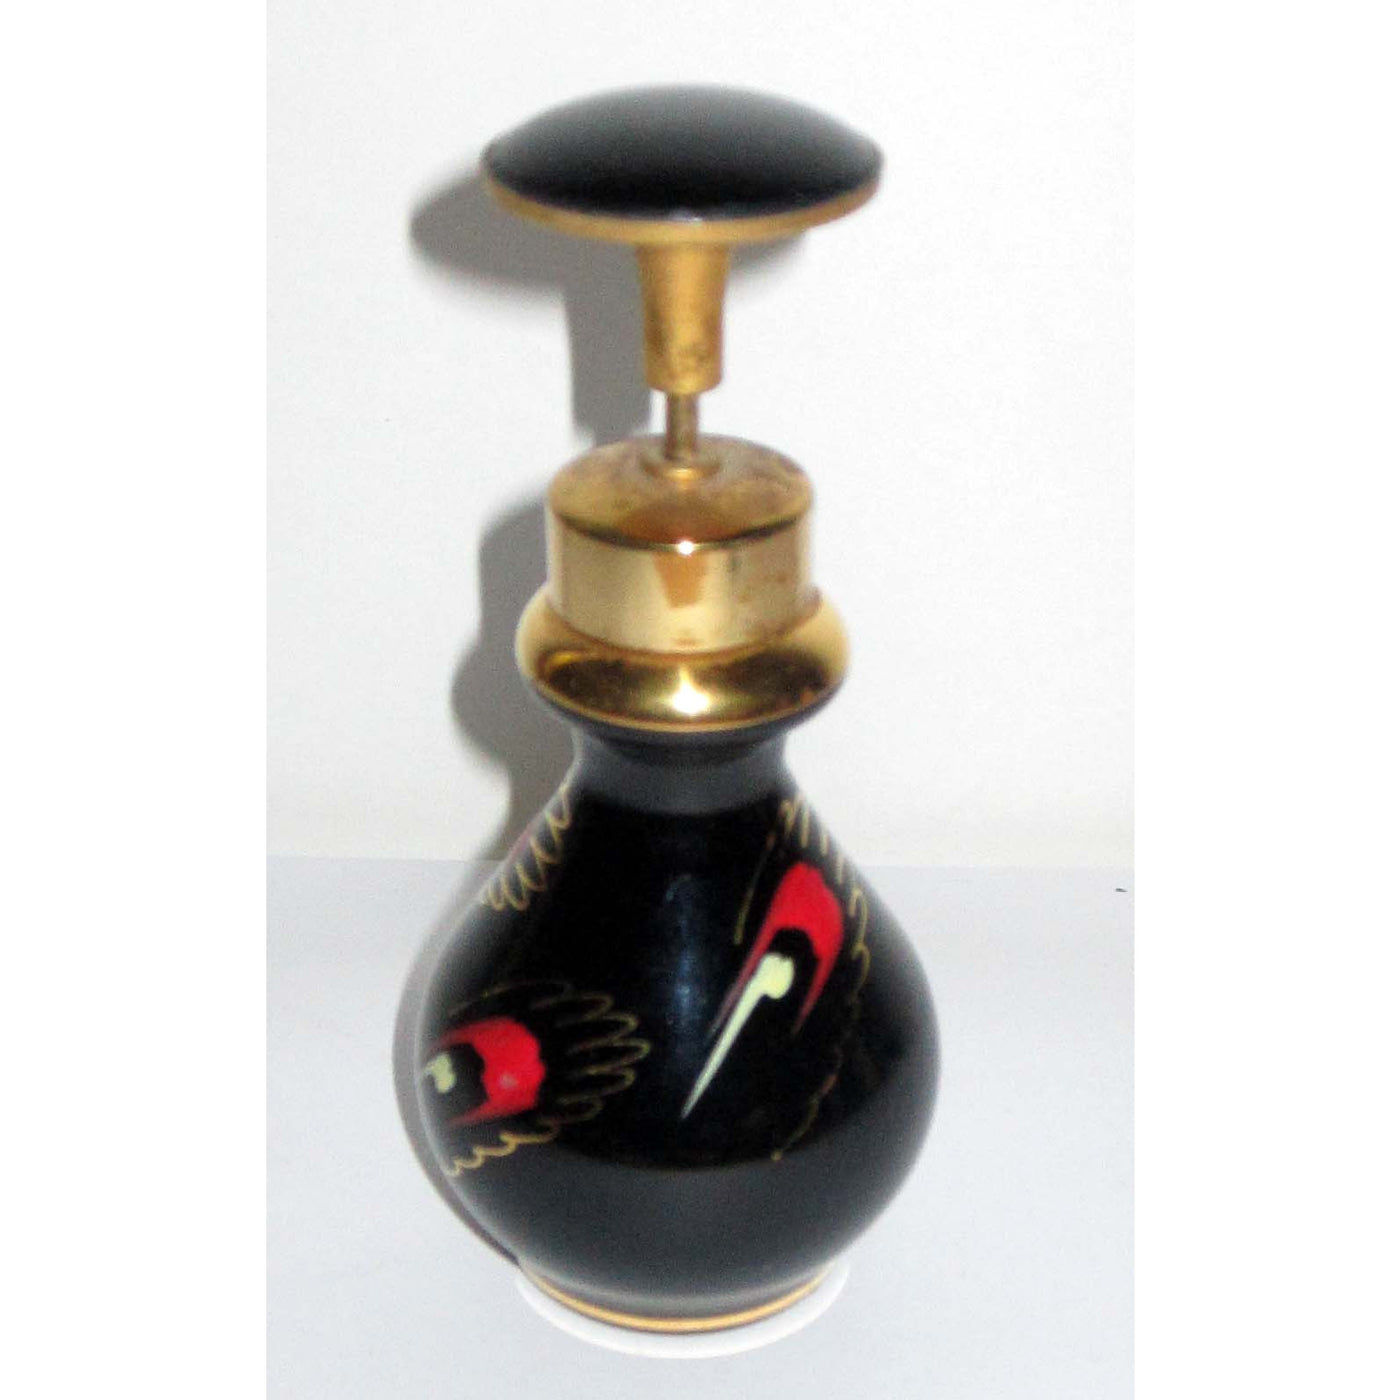  Vintage West German Enamel Perfume Atomizer